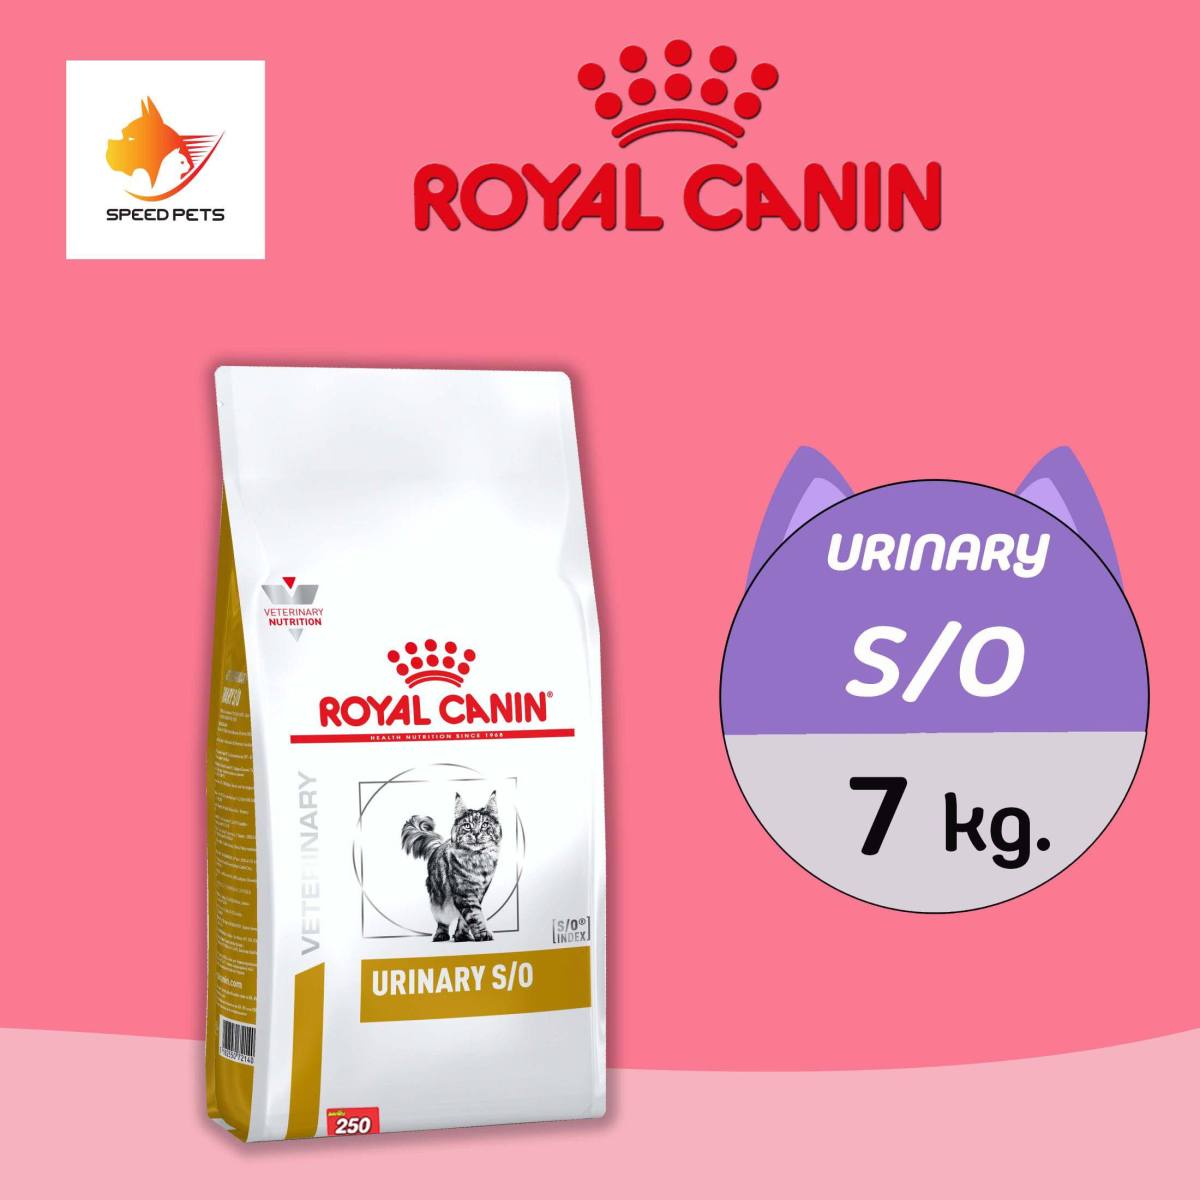 Royal canin urinary s/o dry cat food feline อาหารแมว อาหารแมวนิ่ว โรคนิ่ว กระเพาะปัสสาวะ สะลายนิ่ว ป้องกันนิ่ว 7kg ( ถุงสีขาว )